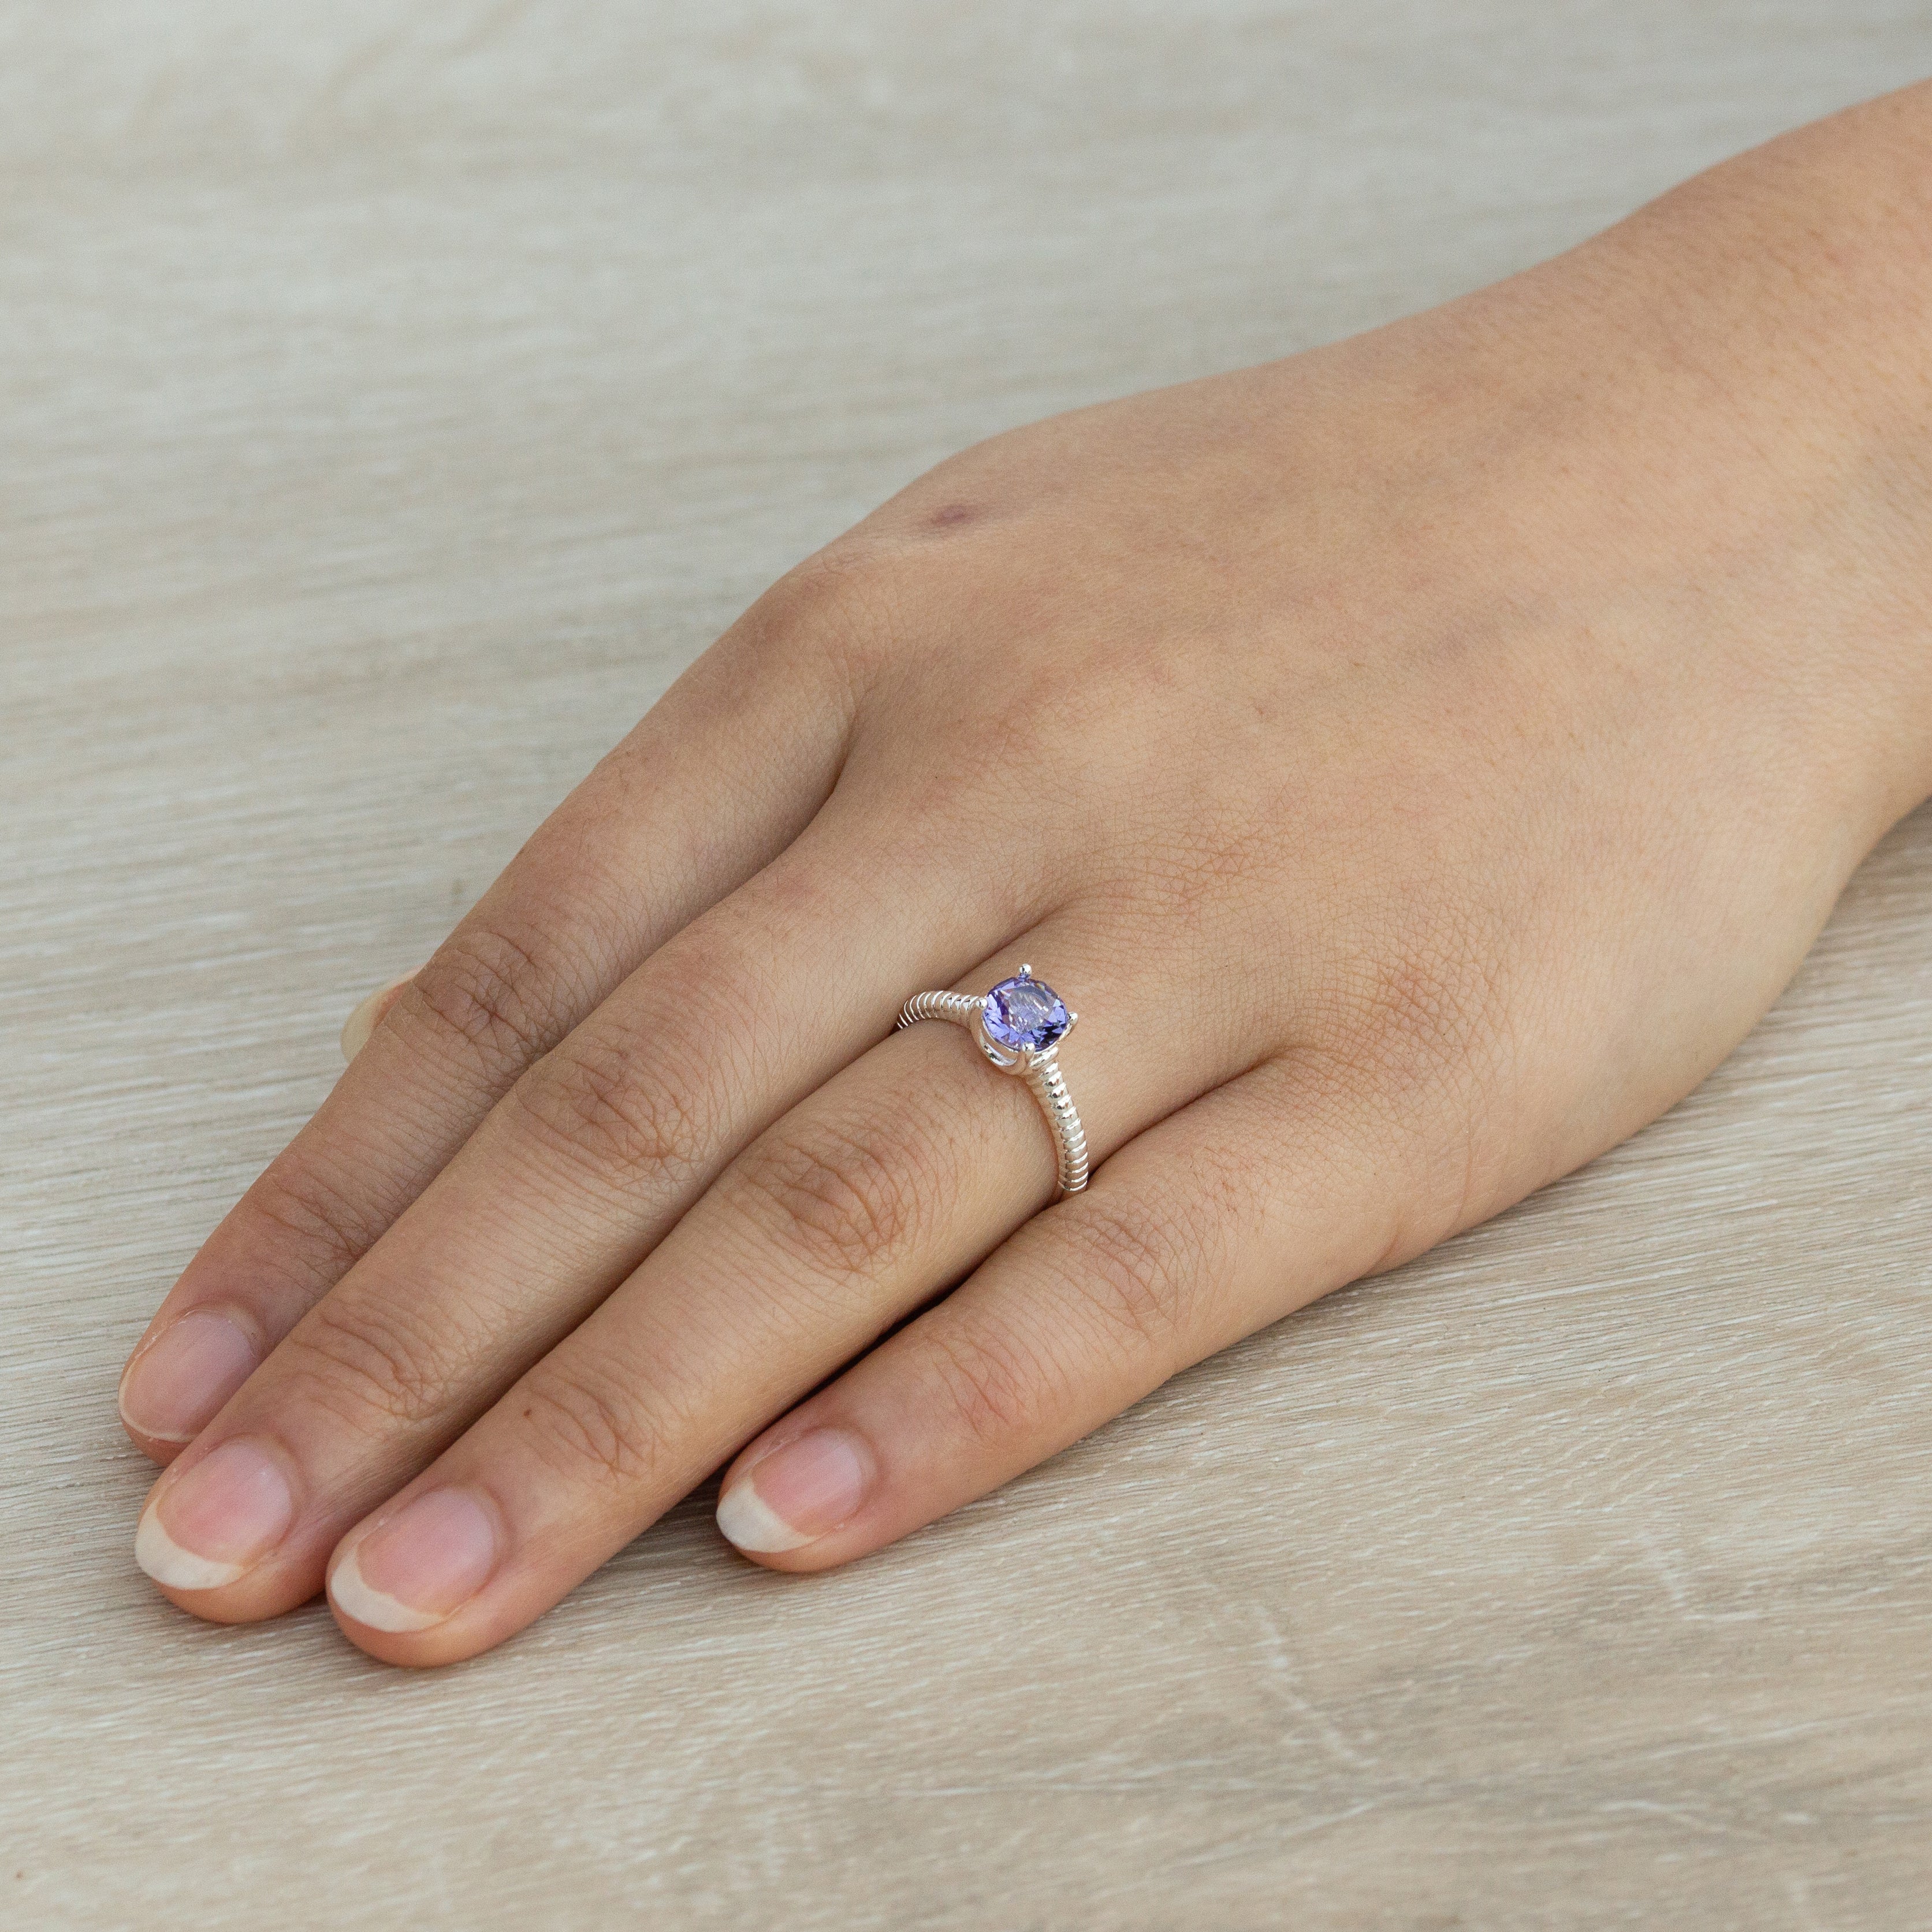 Light Purple Adjustable Crystal Ring Created with Zircondia® Crystals